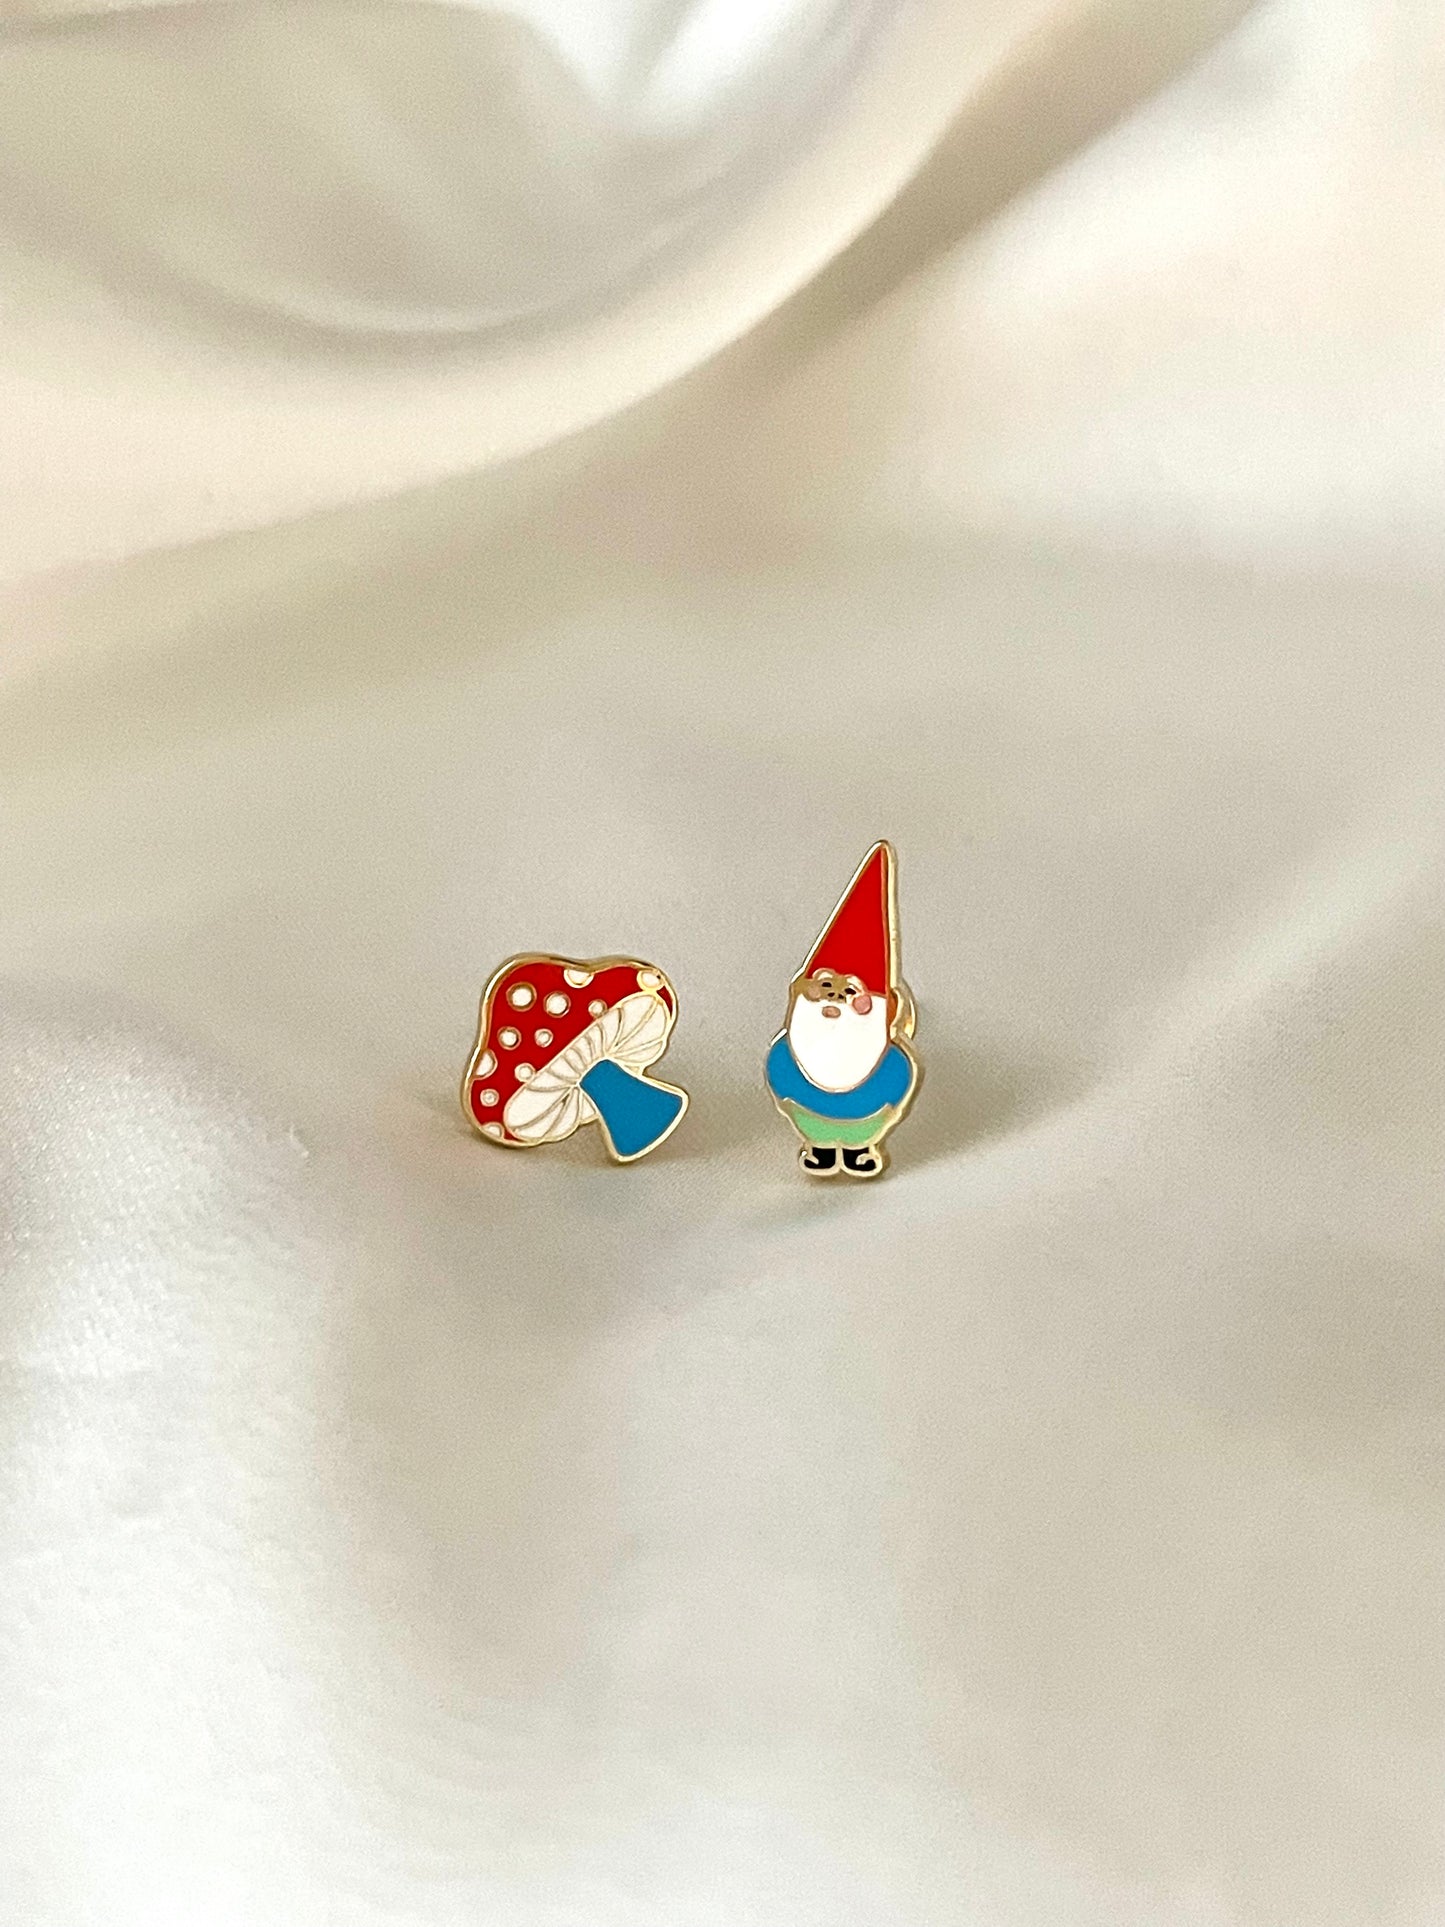 gnome and mushroom earrings